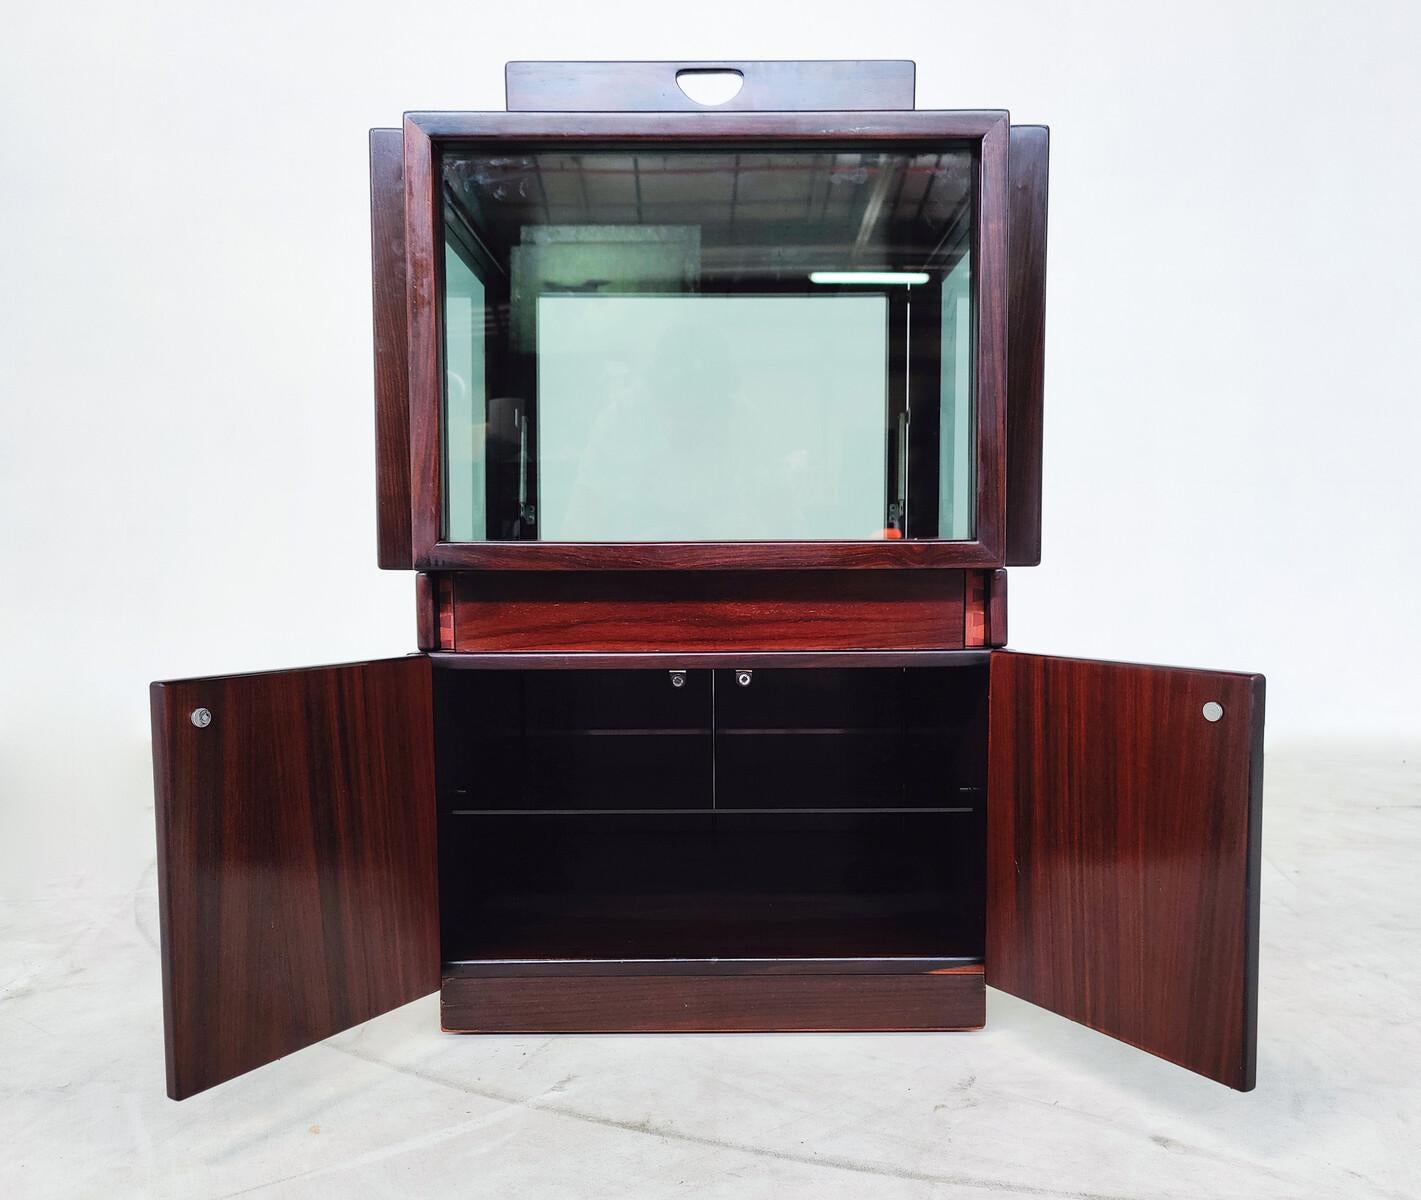 Midcentury Wooden Bar Cabinet on Wheels by Gianfranco Frattini for Bernini 1